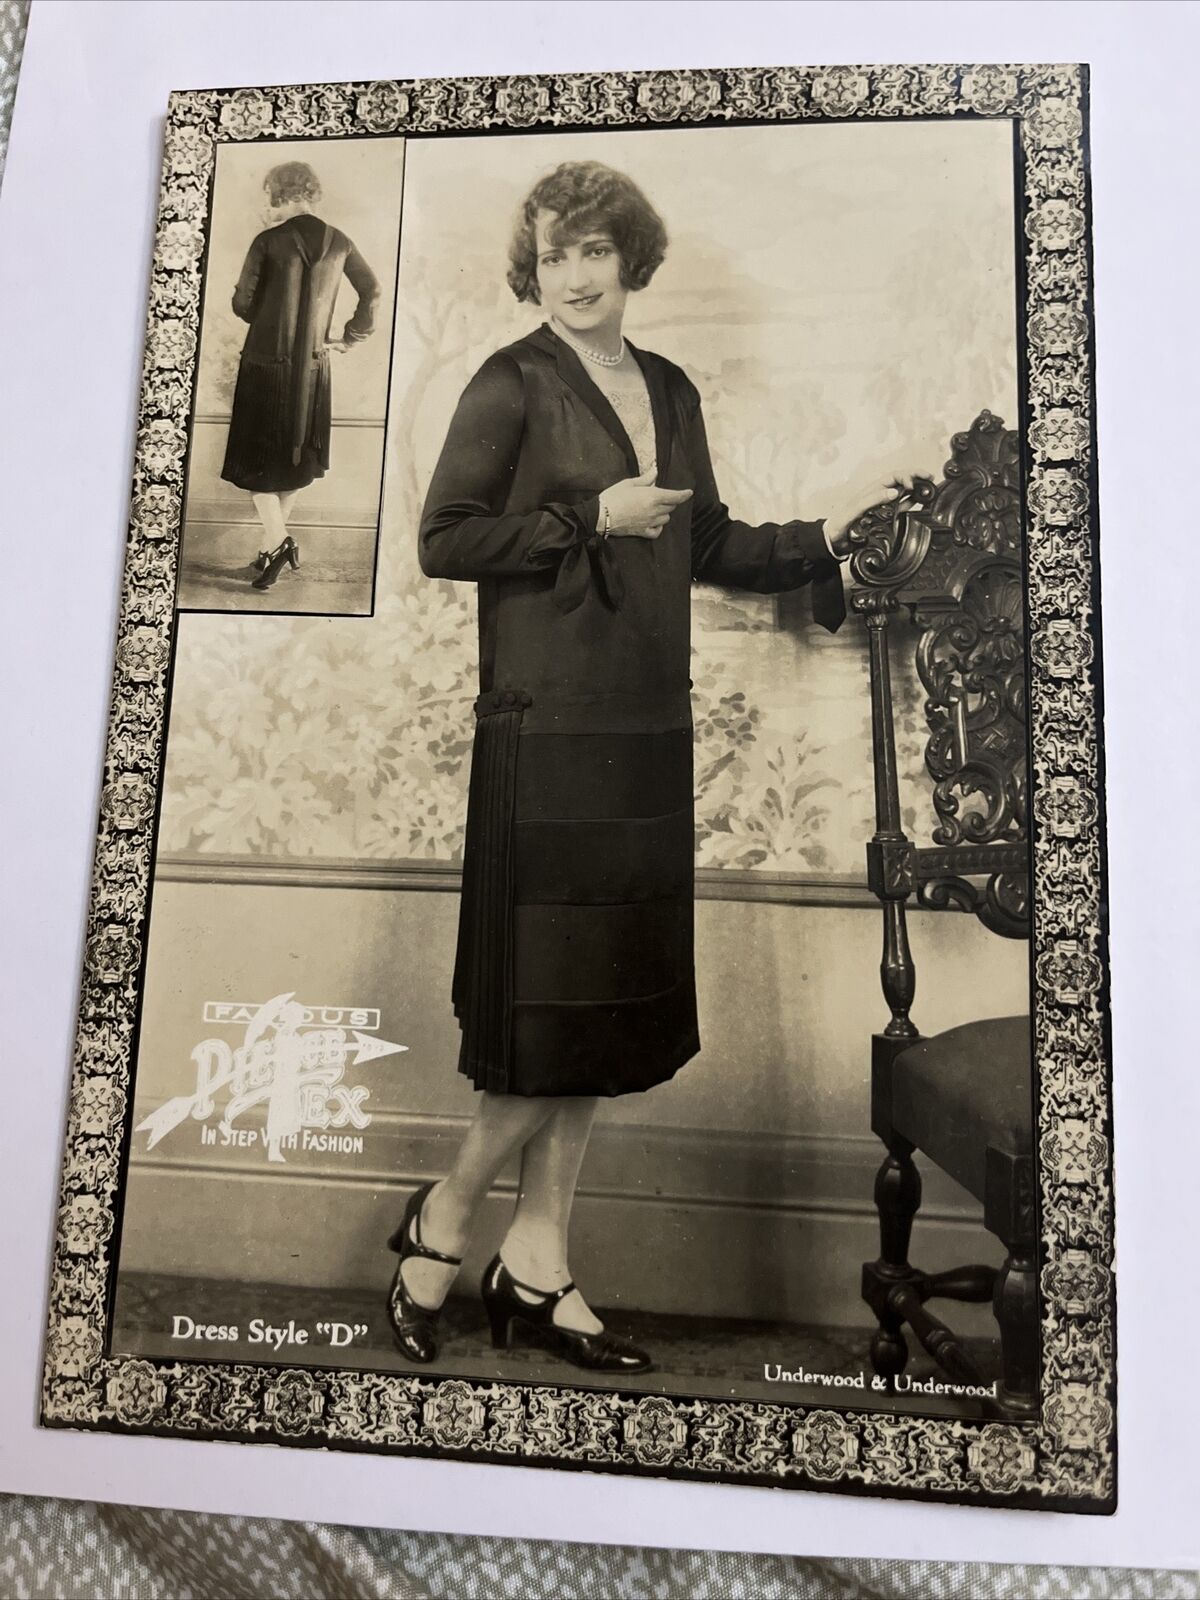 Vintage Deco Era Fashion Photo Advertisement Sample LH Pierce Textile Dress